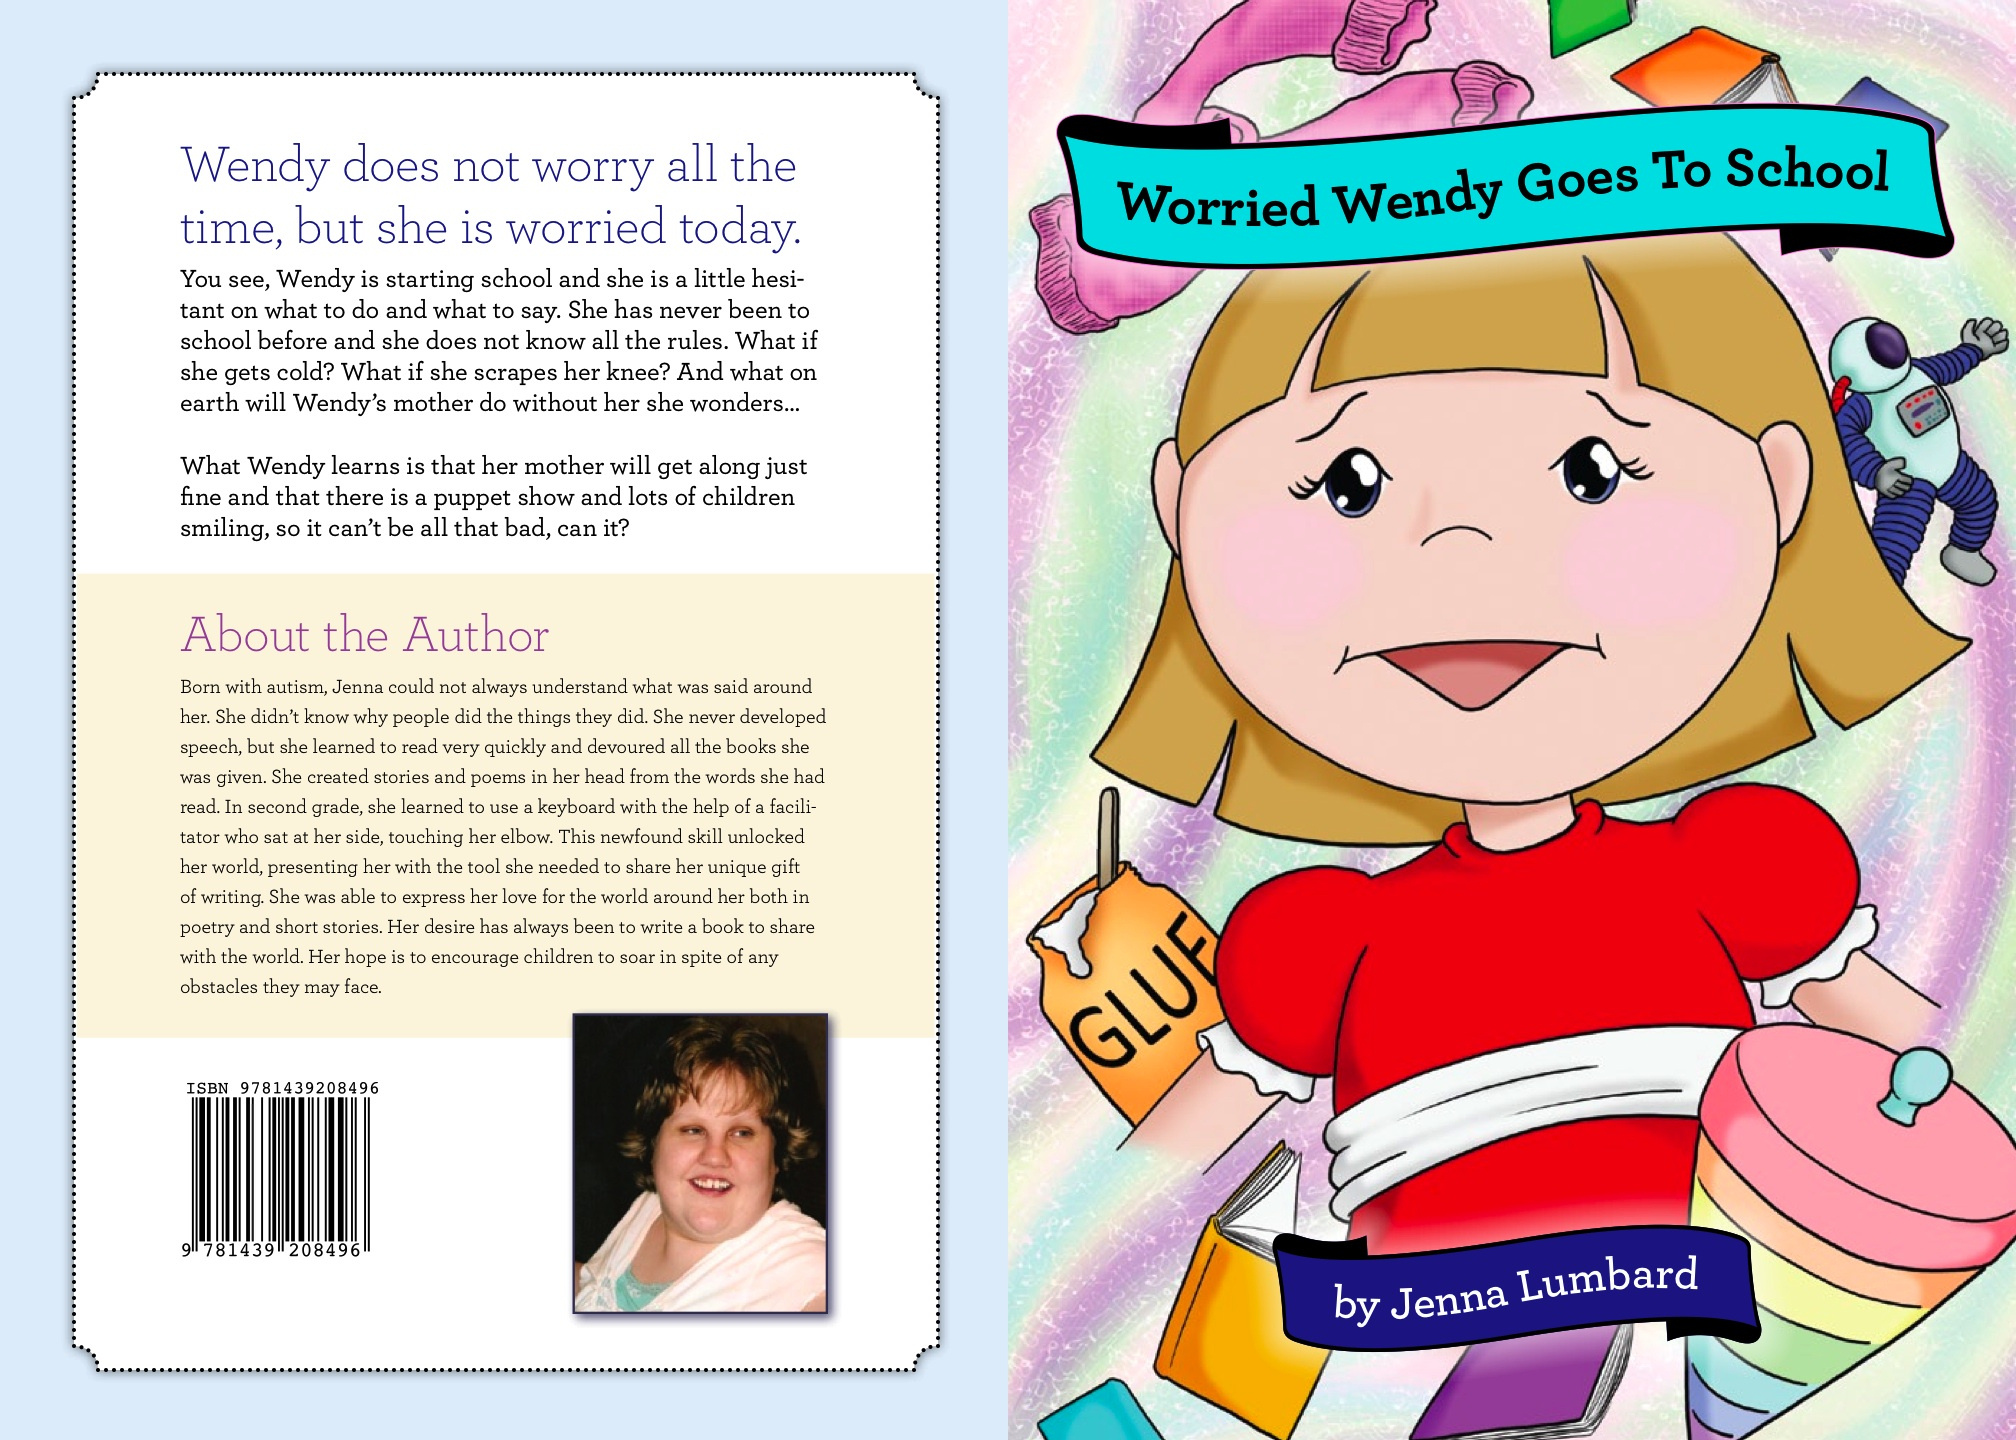 Despite Autism, New Author Writes Children's Book With ...